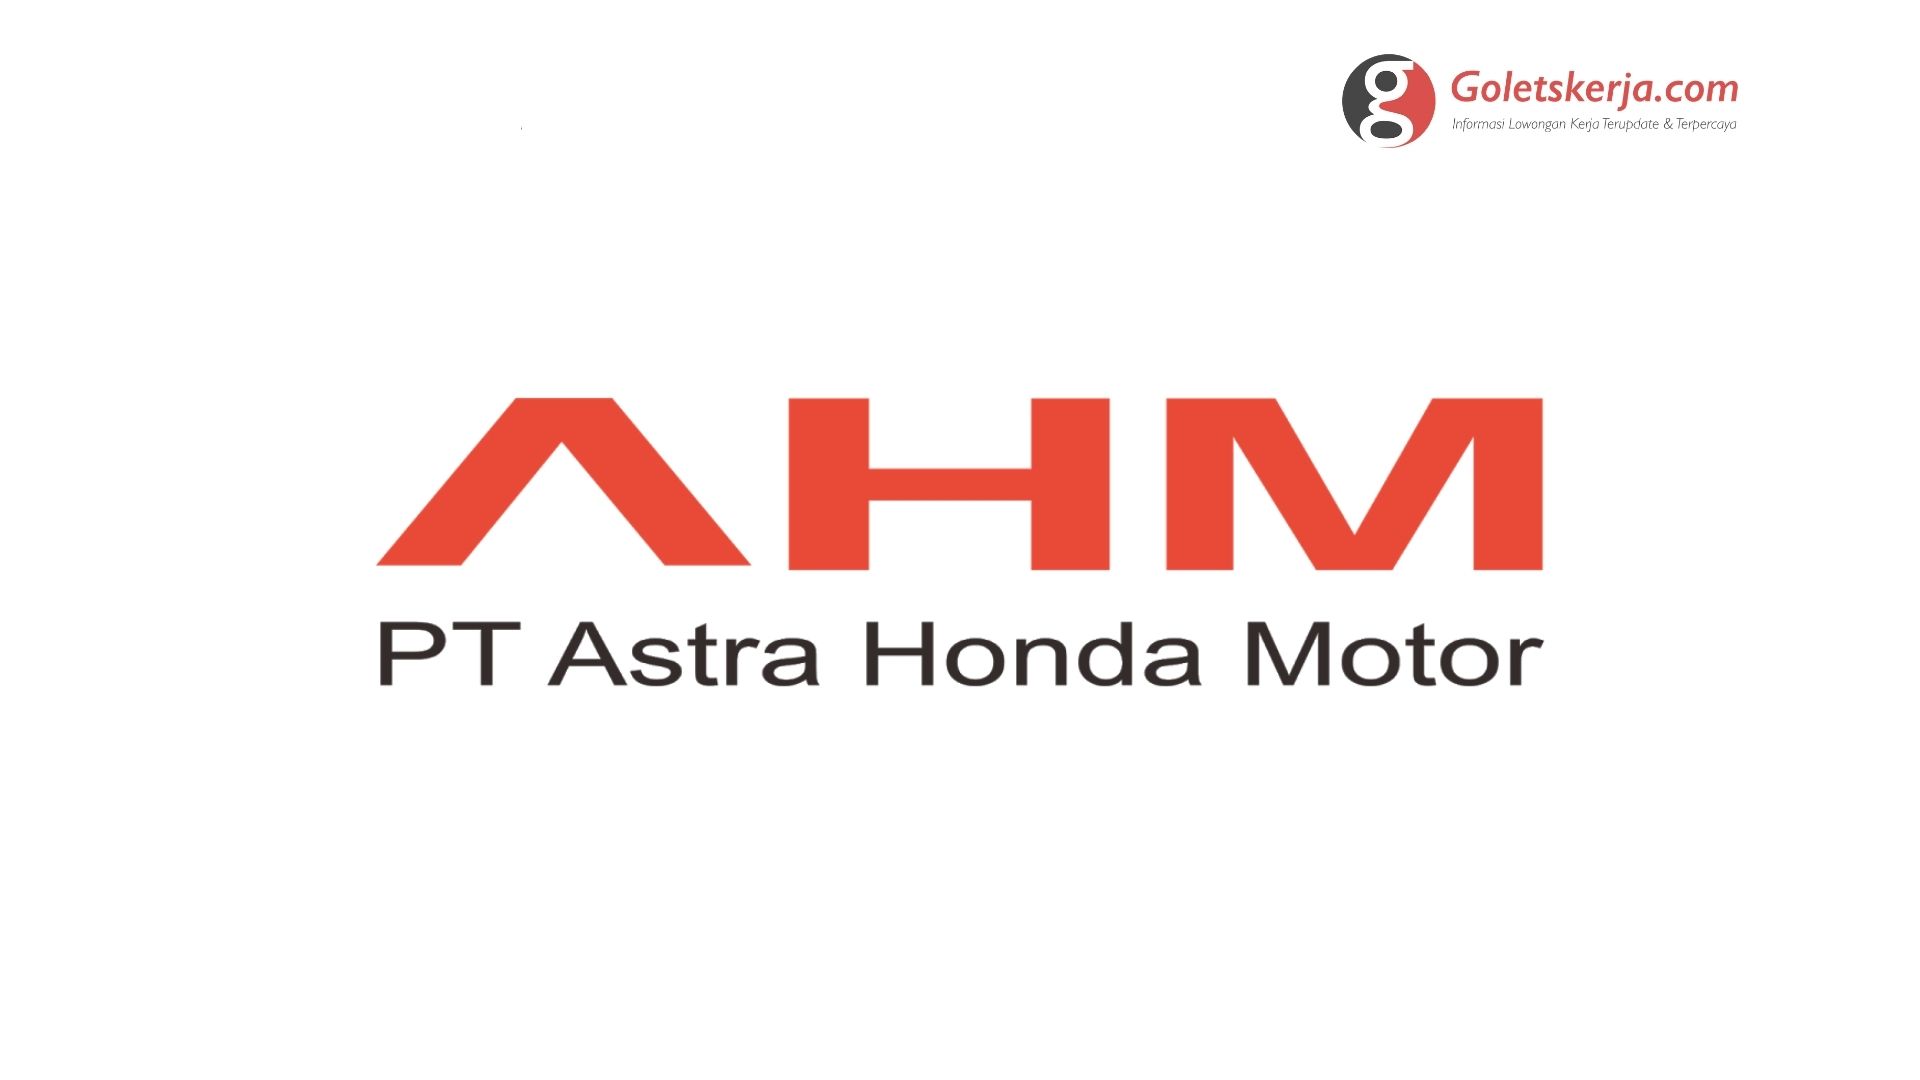 Lowongan Kerja PT Astra Honda Motor (AHM)